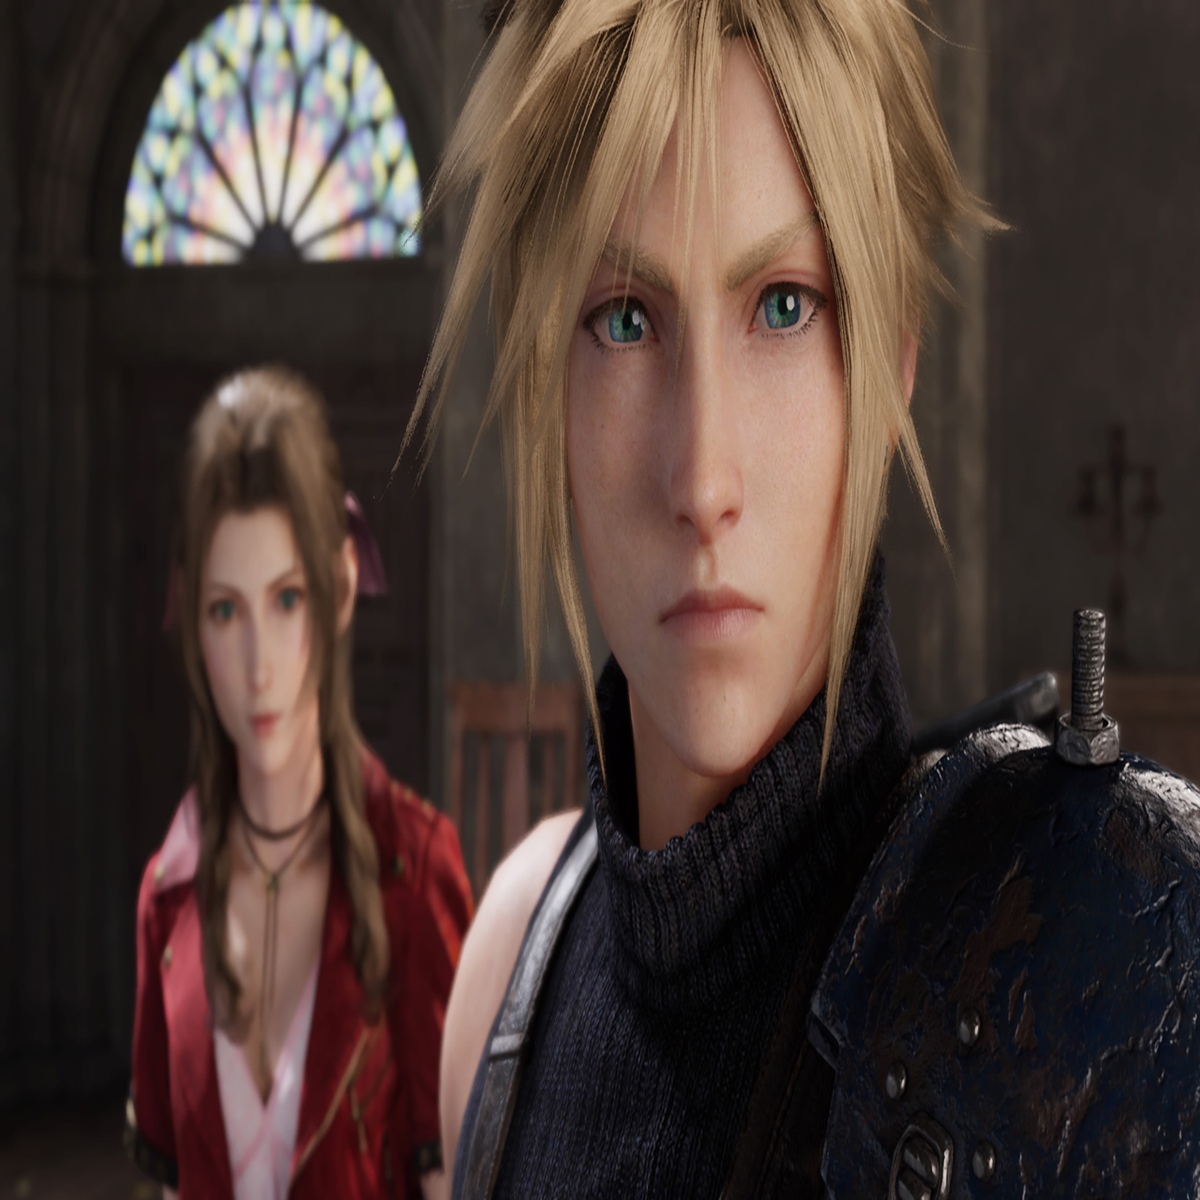 Final Fantasy 7 Remake review